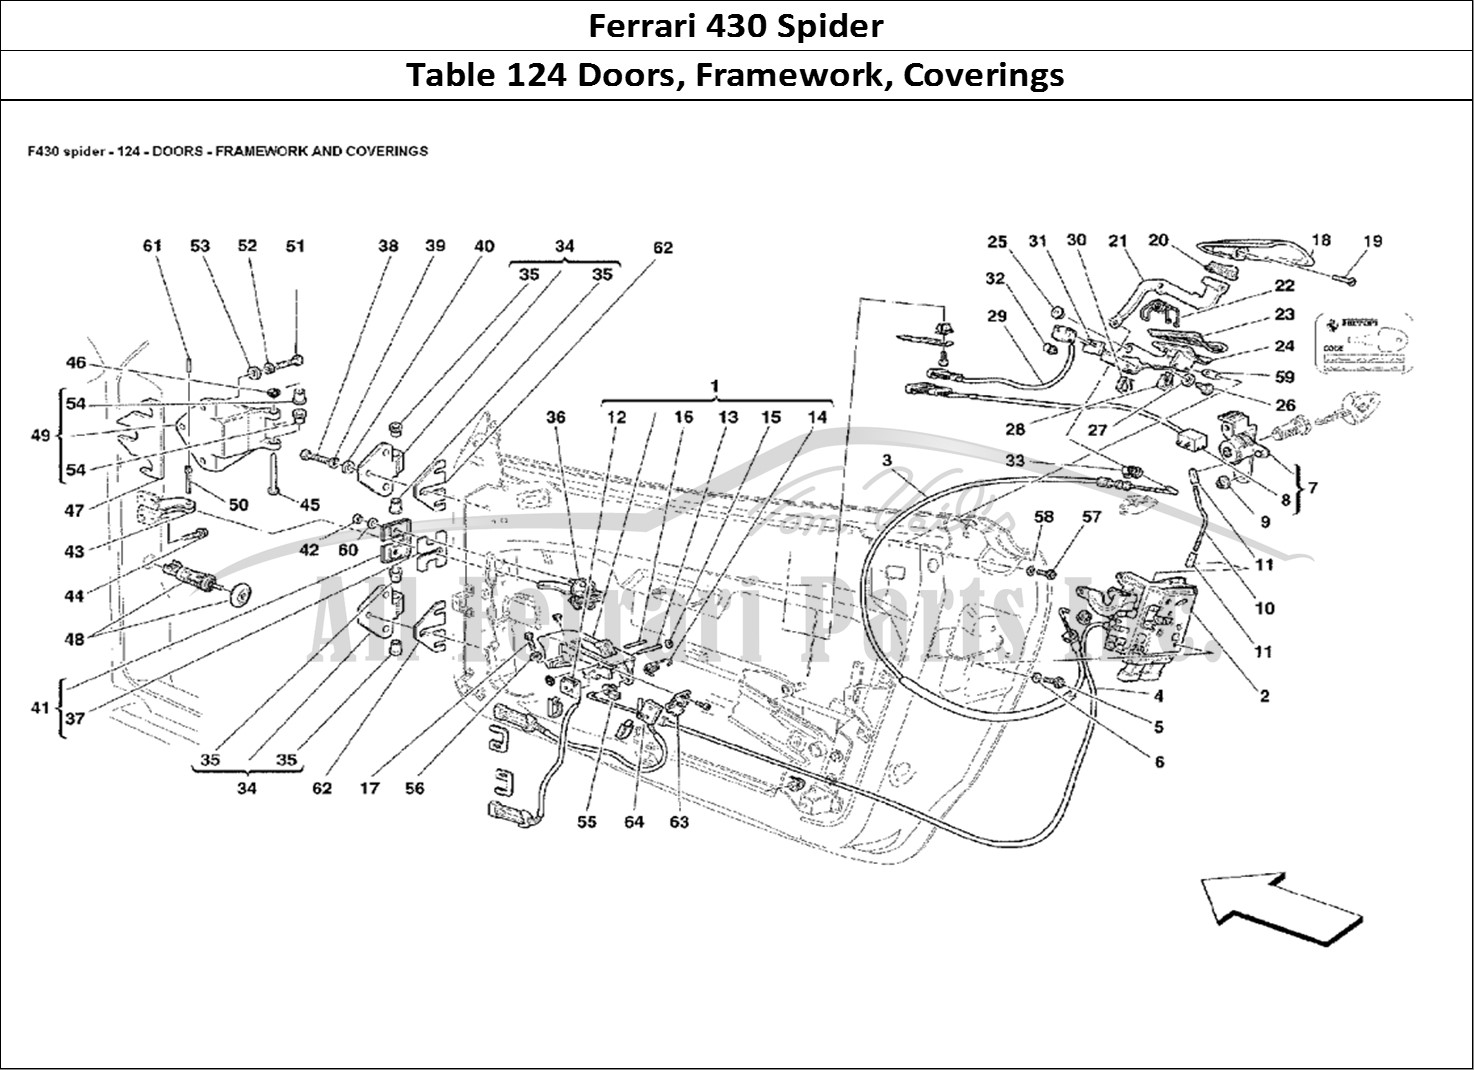 Ferrari Parts Ferrari 430 Spider Page 124 Doors - Framework and Cov